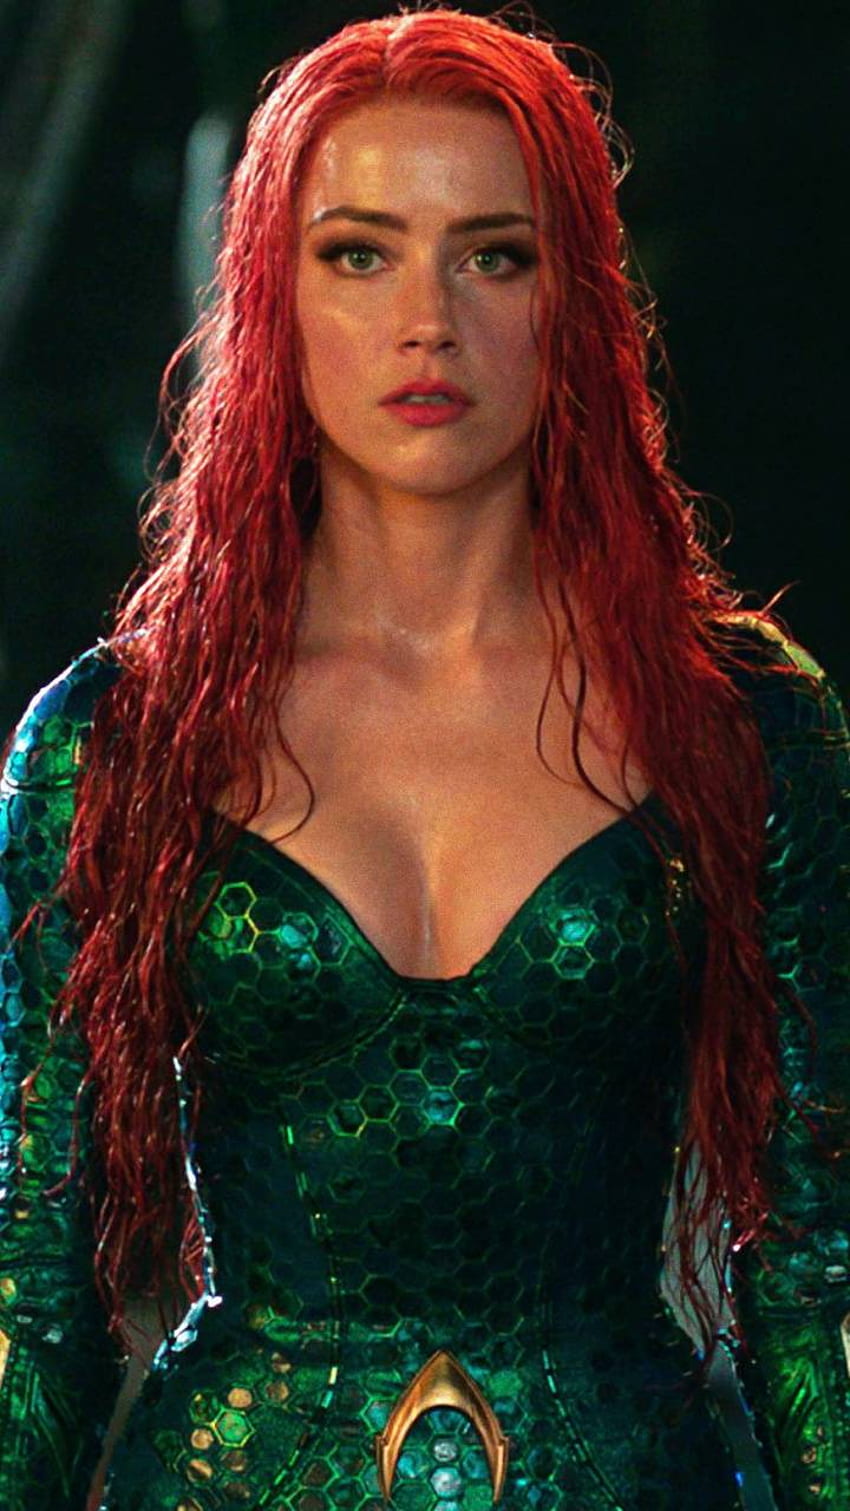 Mera por Taurus_Bosnia - 99, Amber Heard Aquaman Papel de parede de celular HD